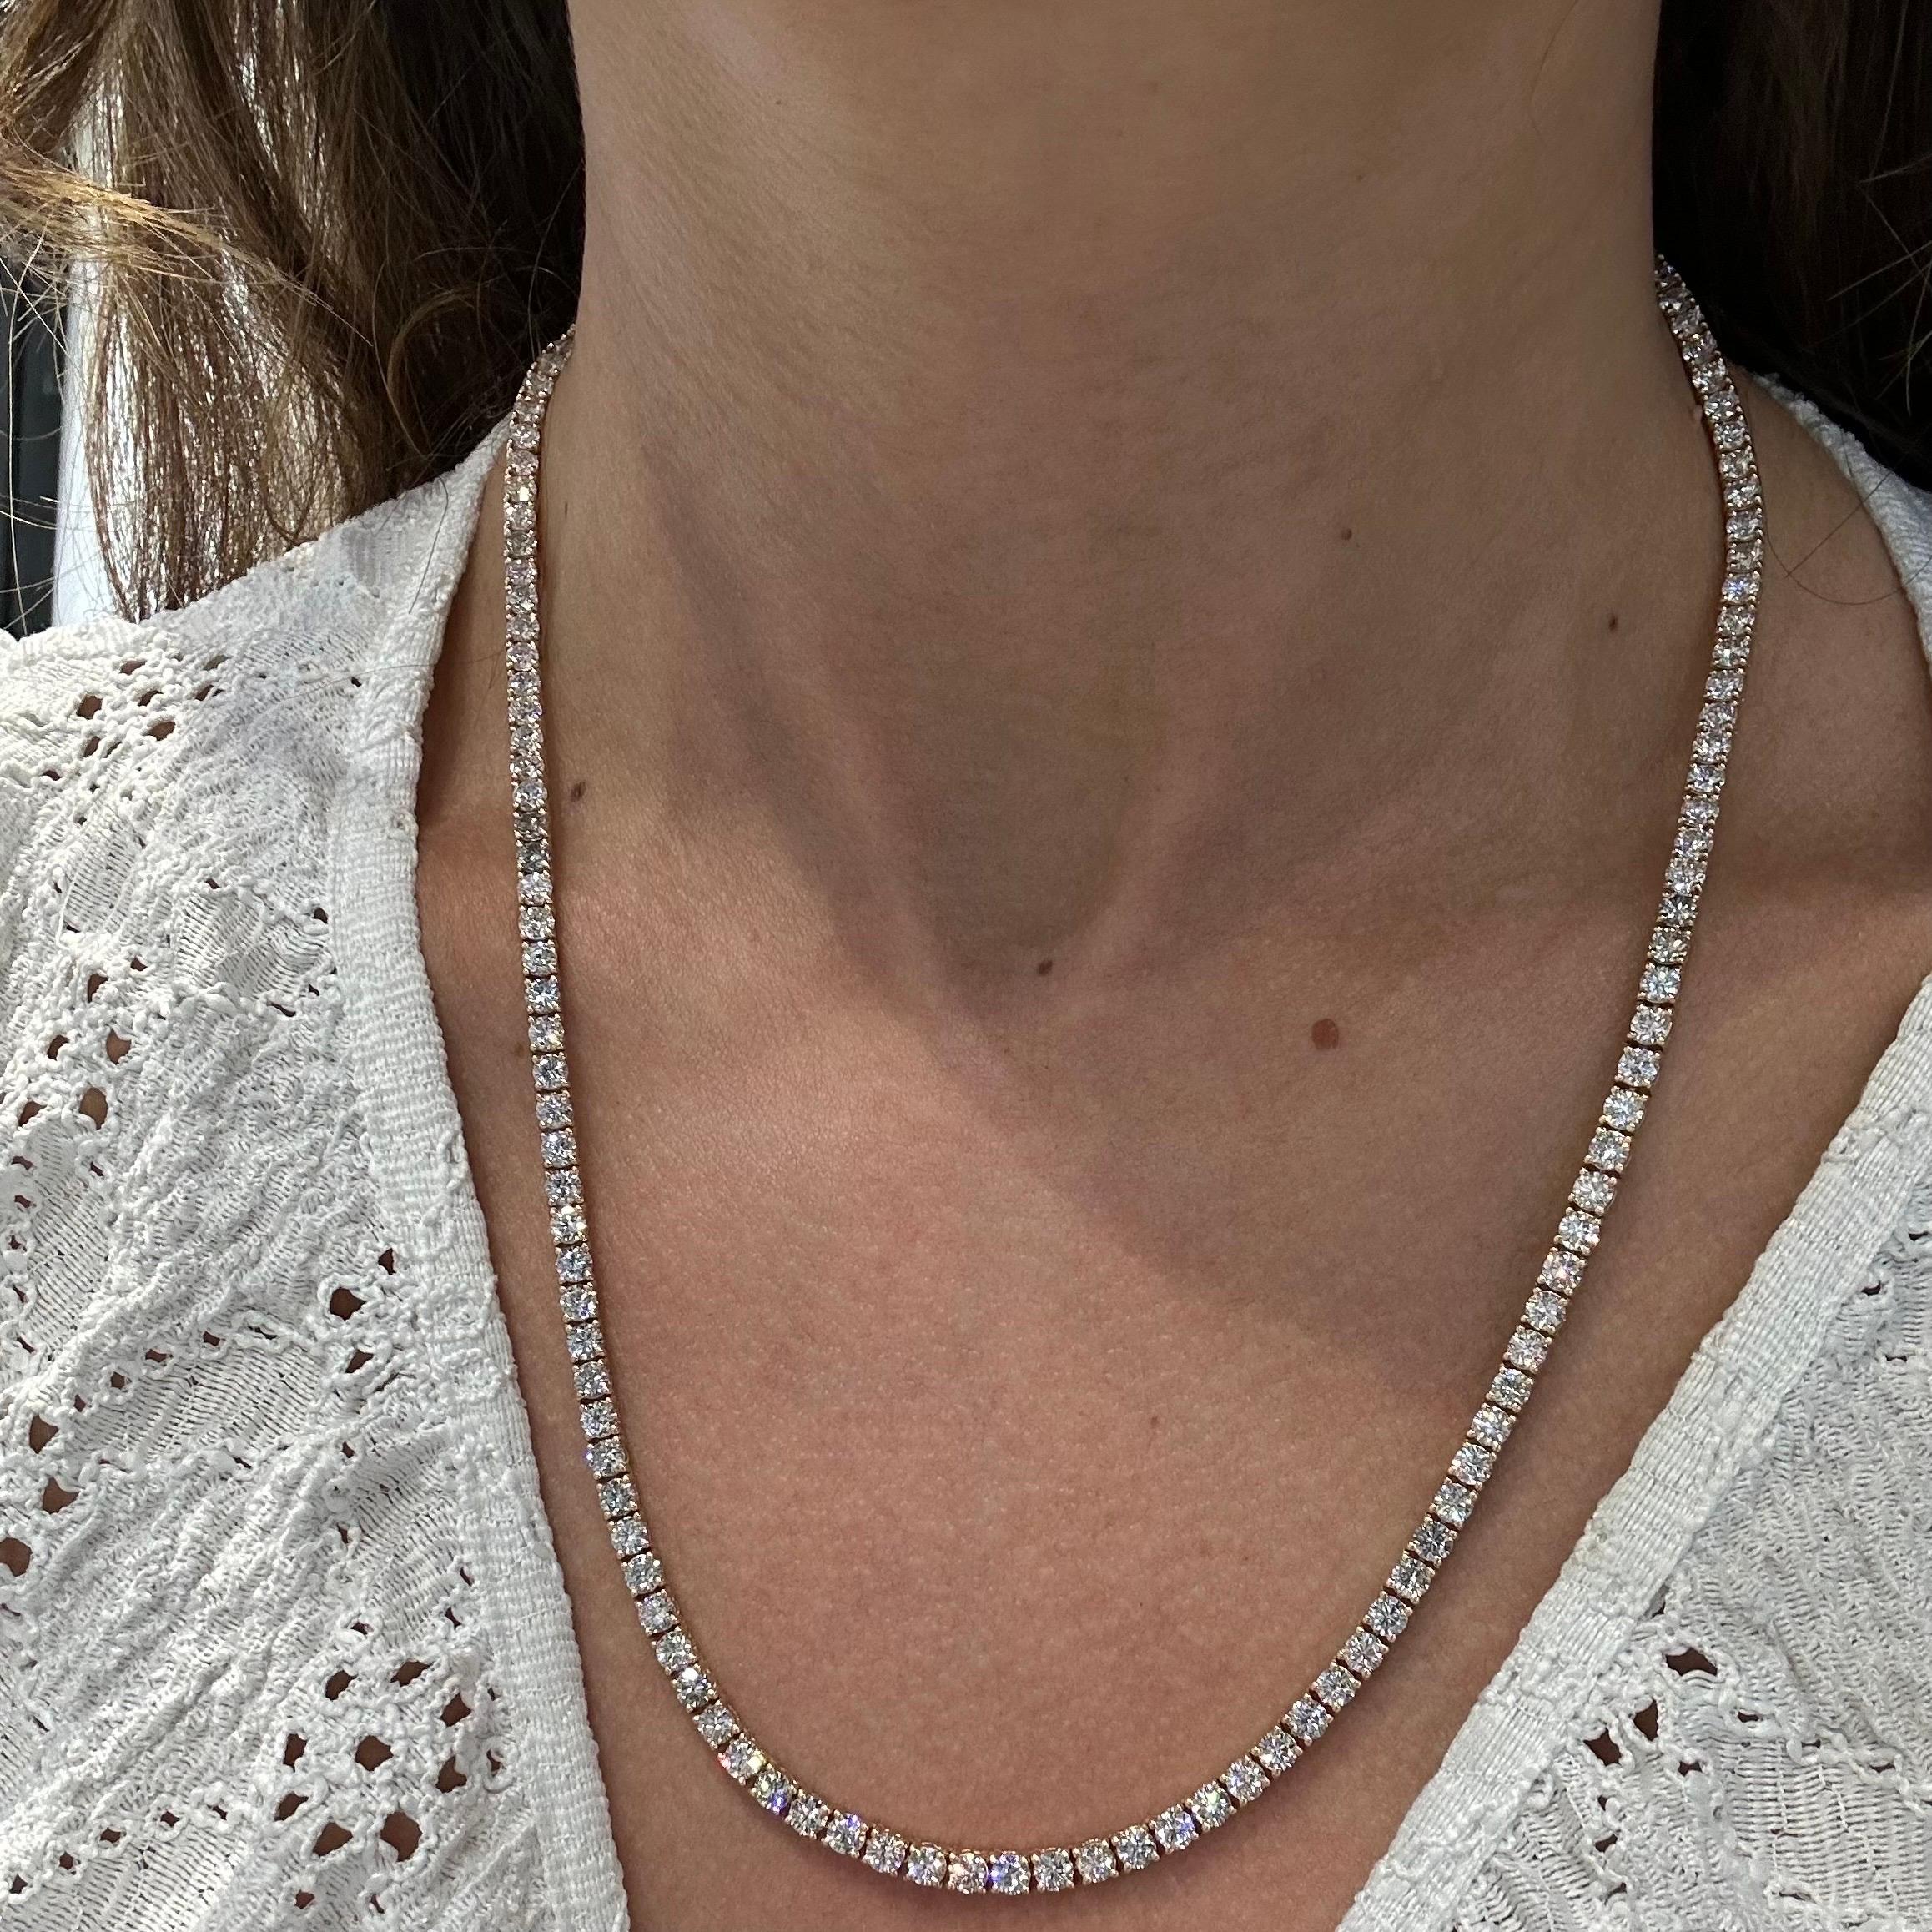 15 inch diamond tennis necklace